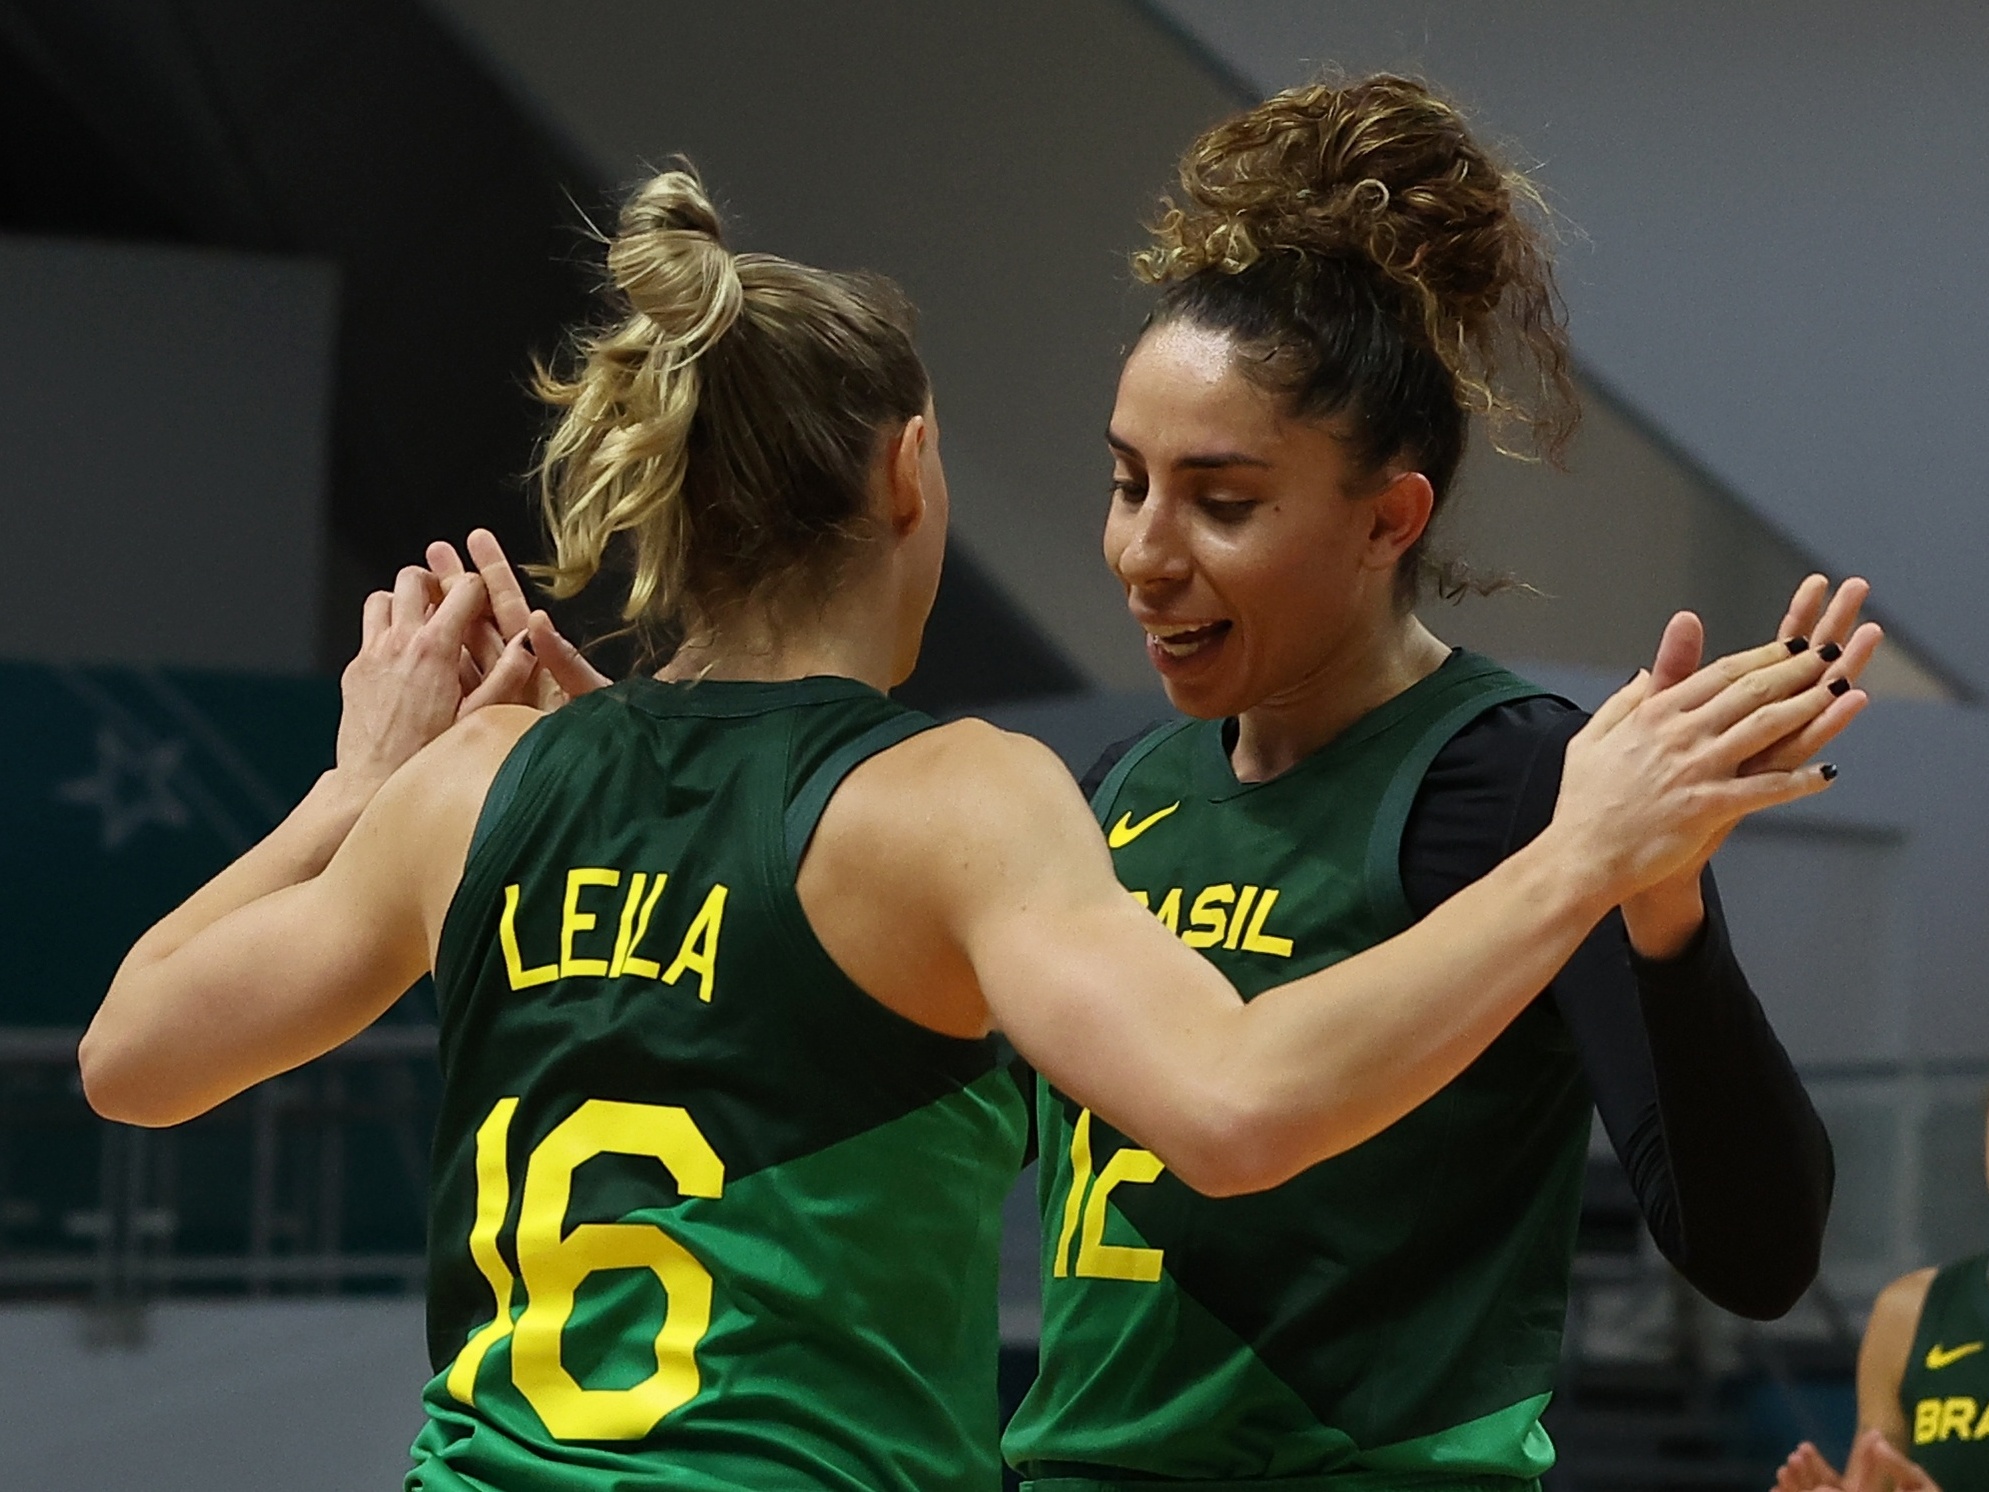 Brasil vence Argentina e está na final do basquete feminino no Pan 2023